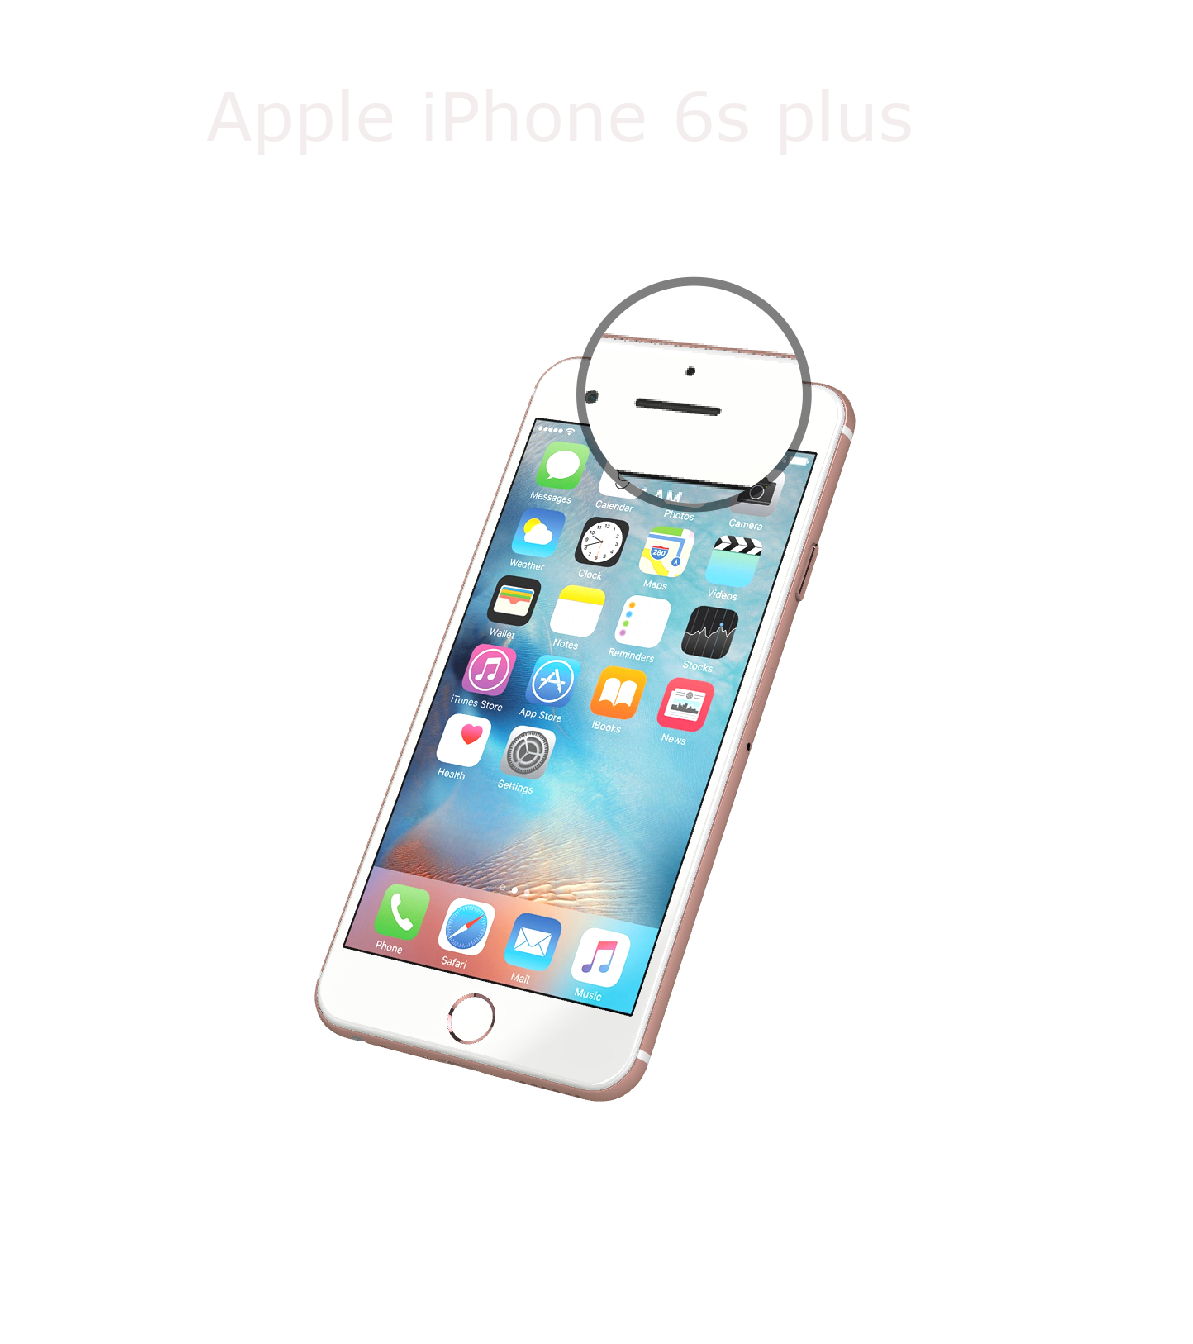 Laga samtalshögtalare iPhone 6s plus